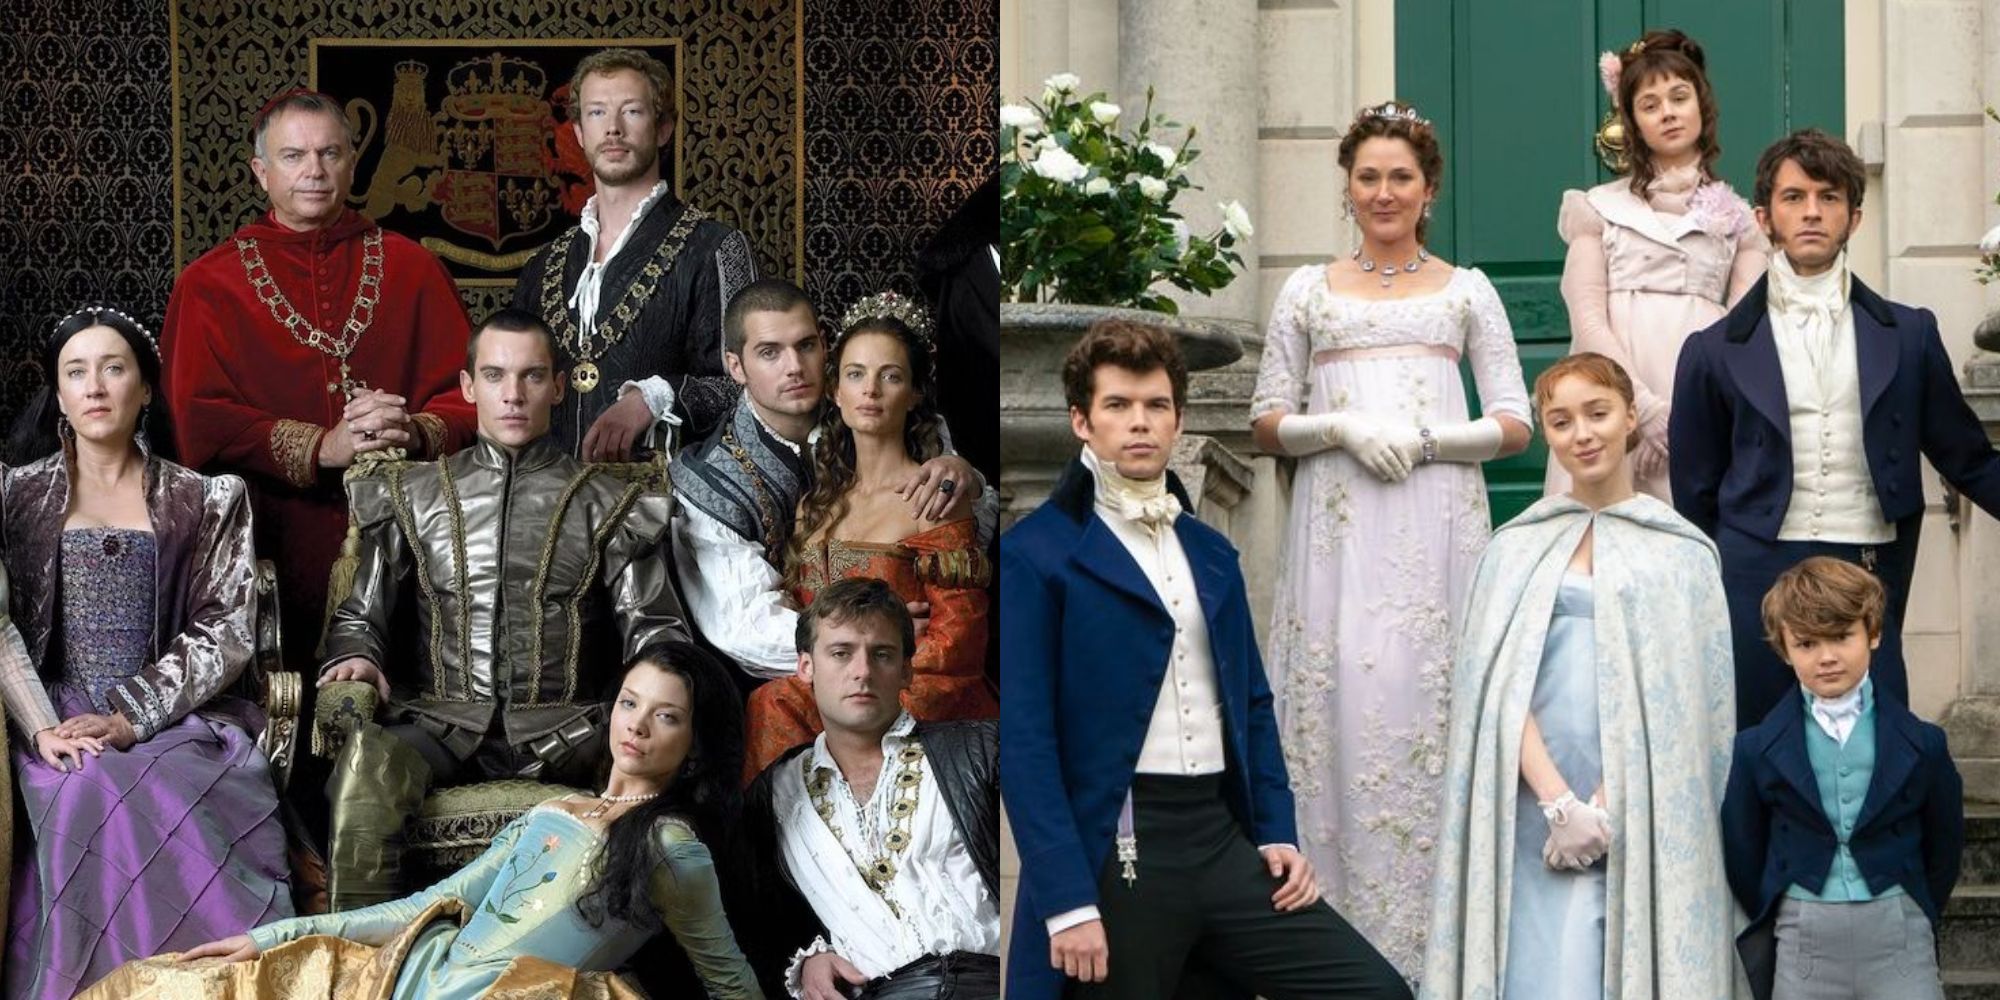 The cast of The Tudors and Bridgerton 